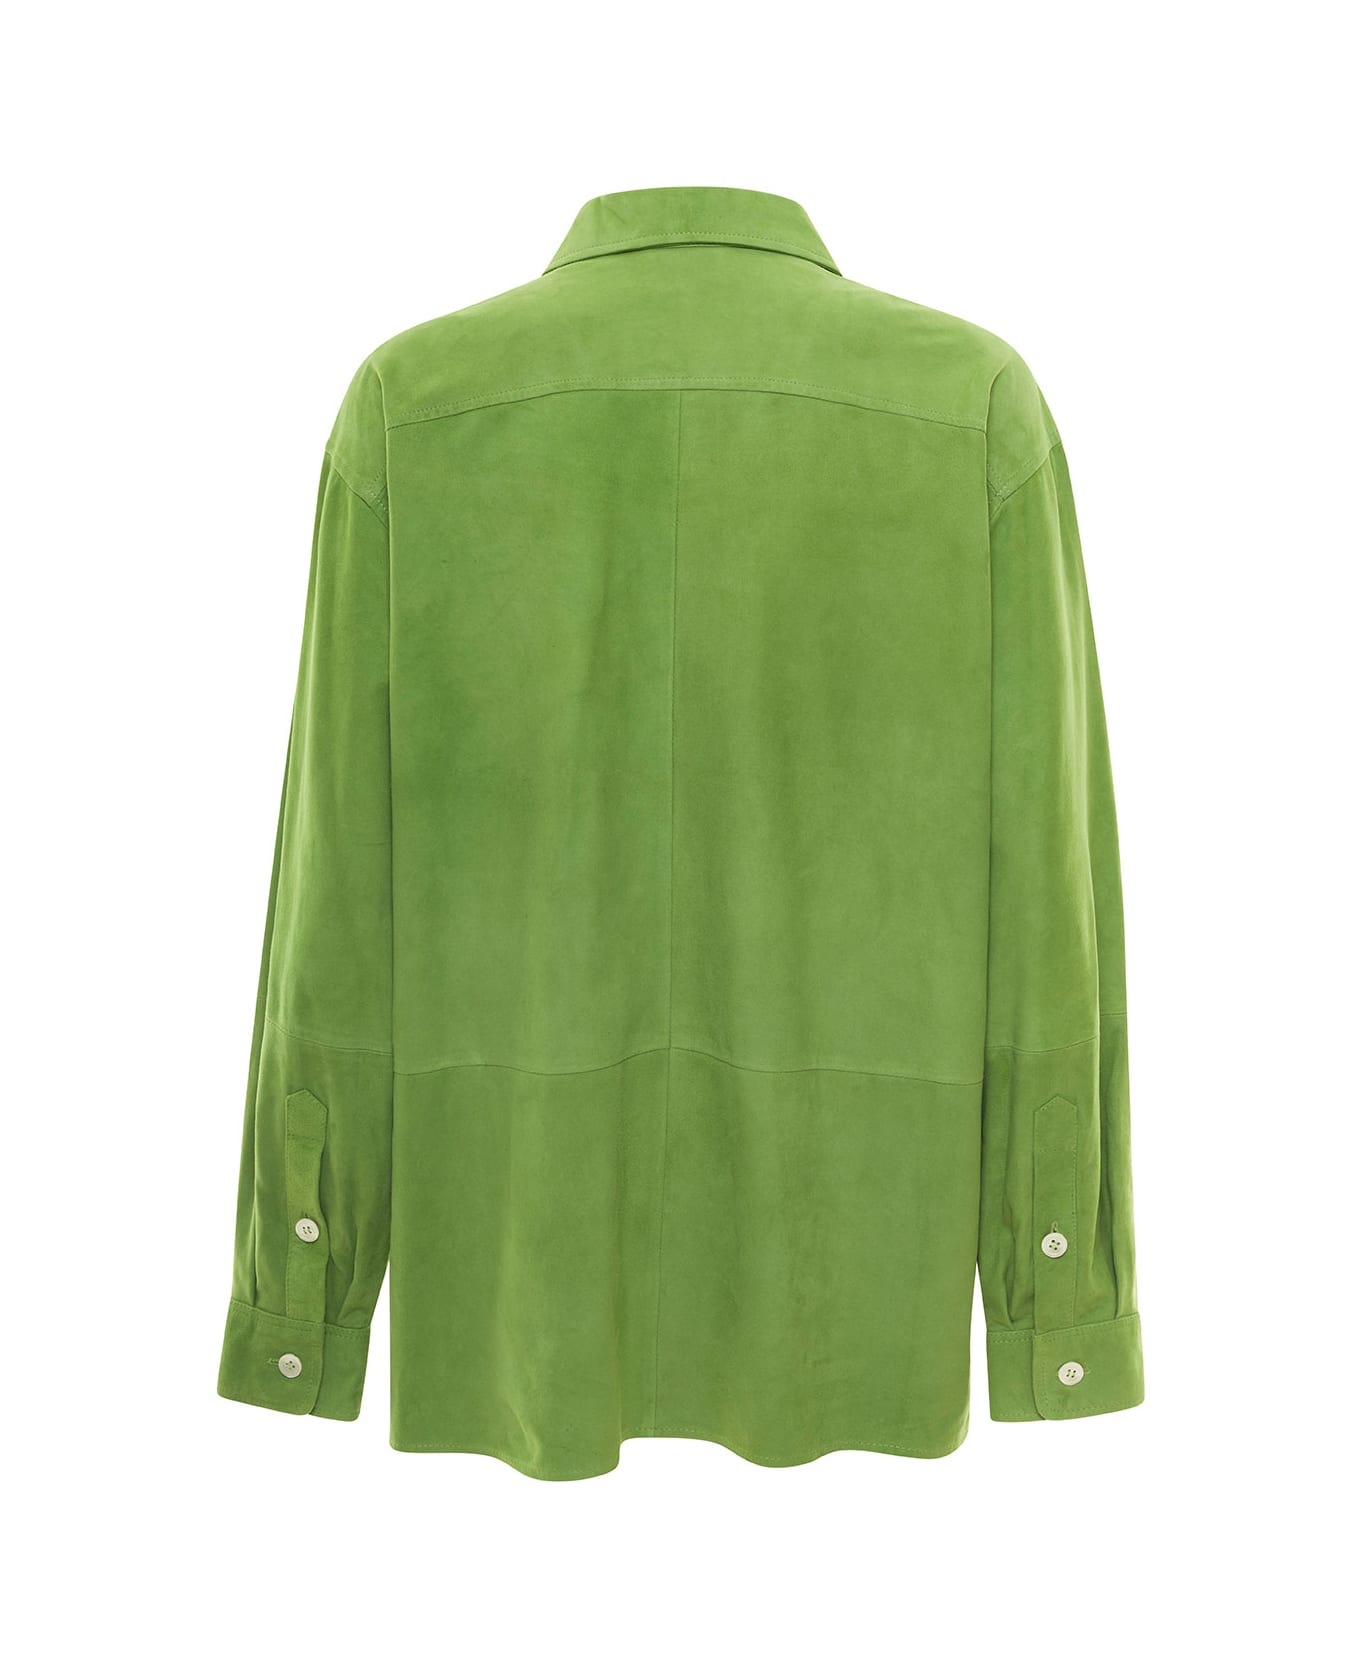 ARMA Matcha Green Long Sleeve Shirt In Suede Woman - Green